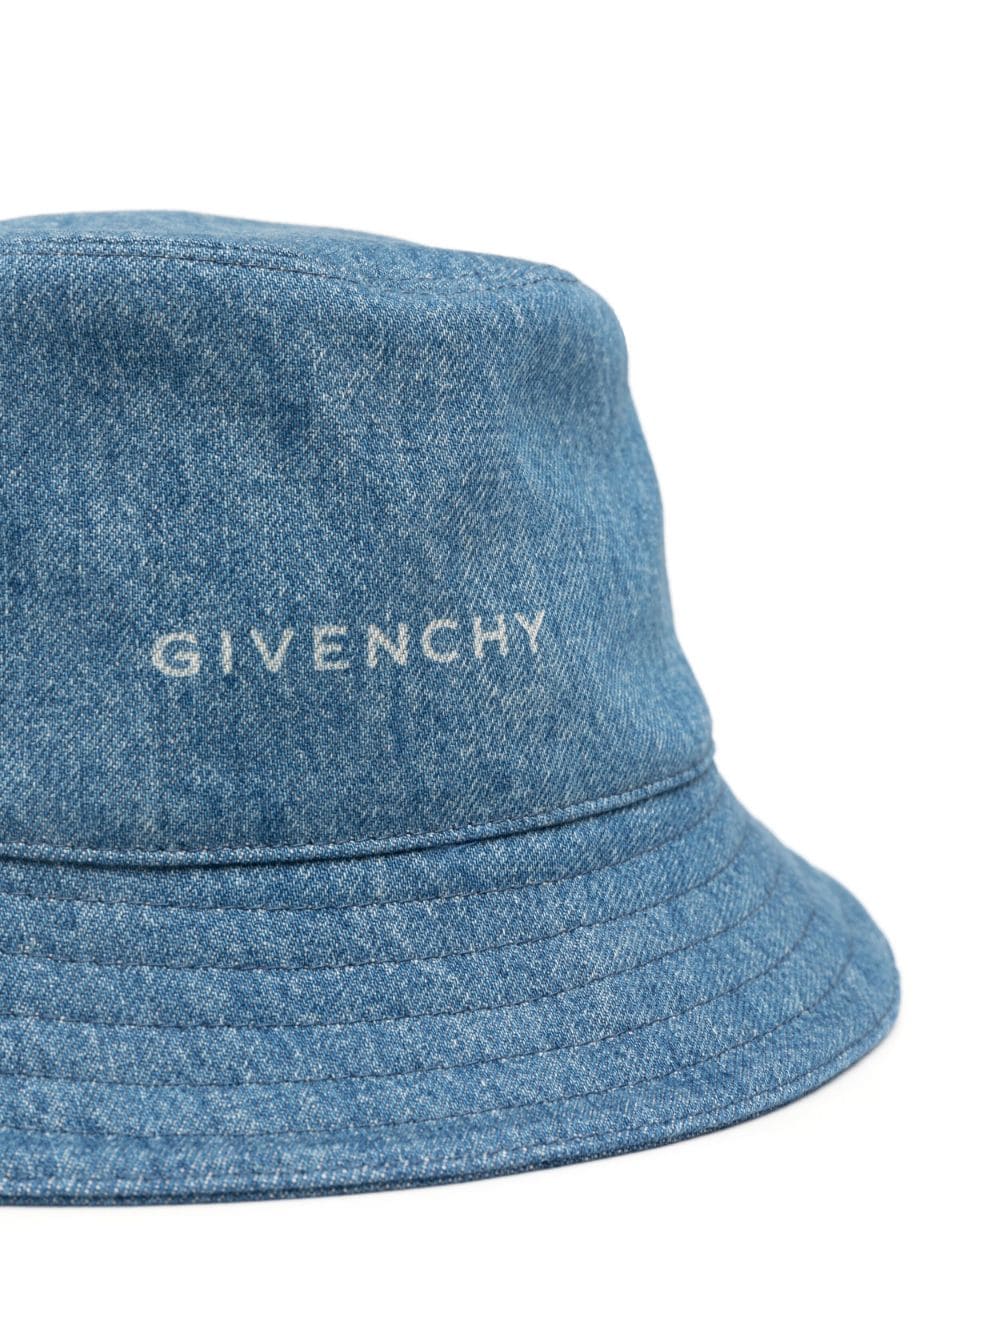 Image 2 of Givenchy logo-print denim bucket hat